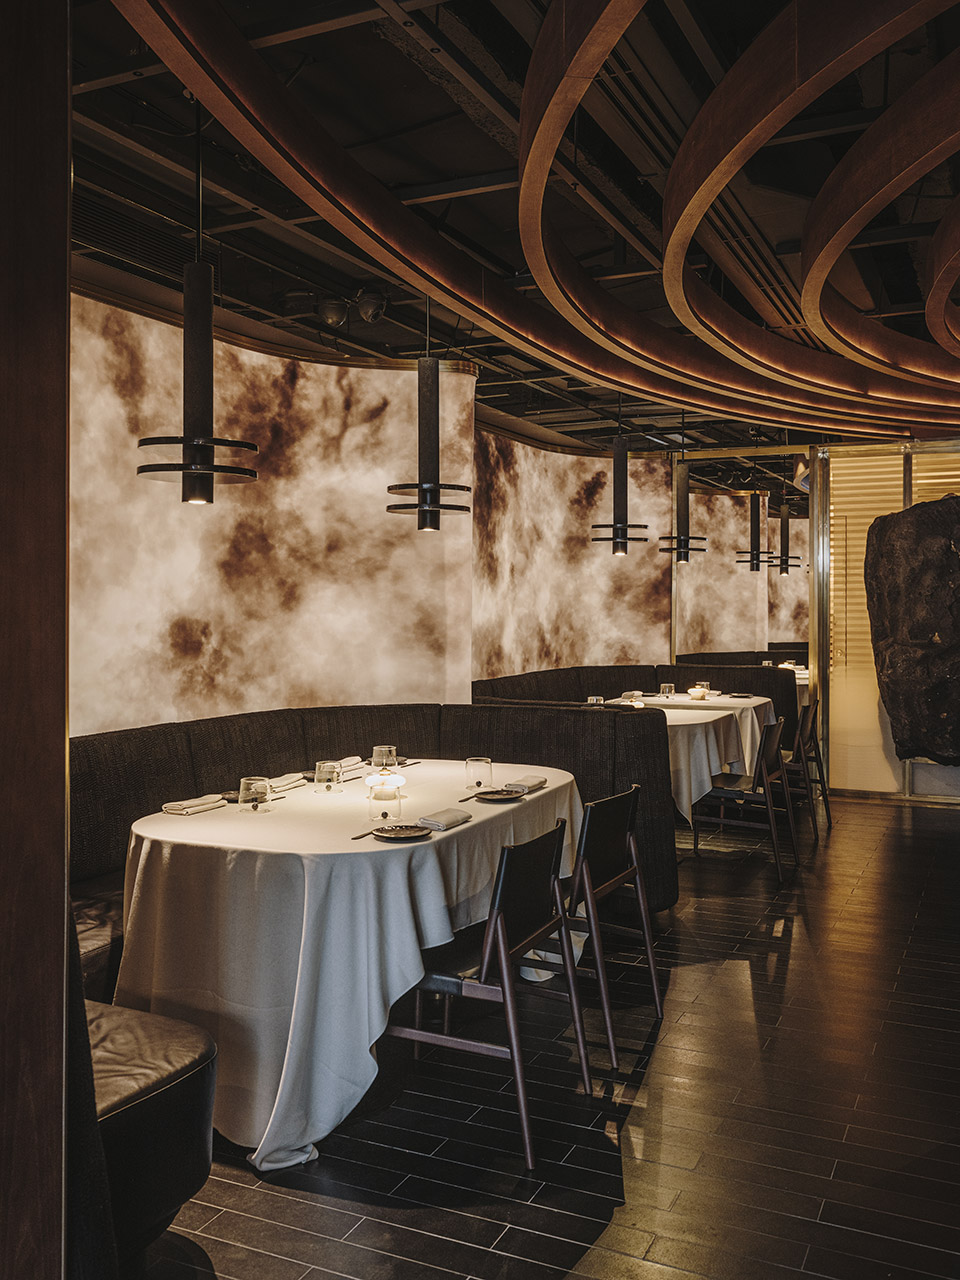 Leña餐厅，西班牙/木头、石头和炭火，提取最原始的烹饪精髓-26